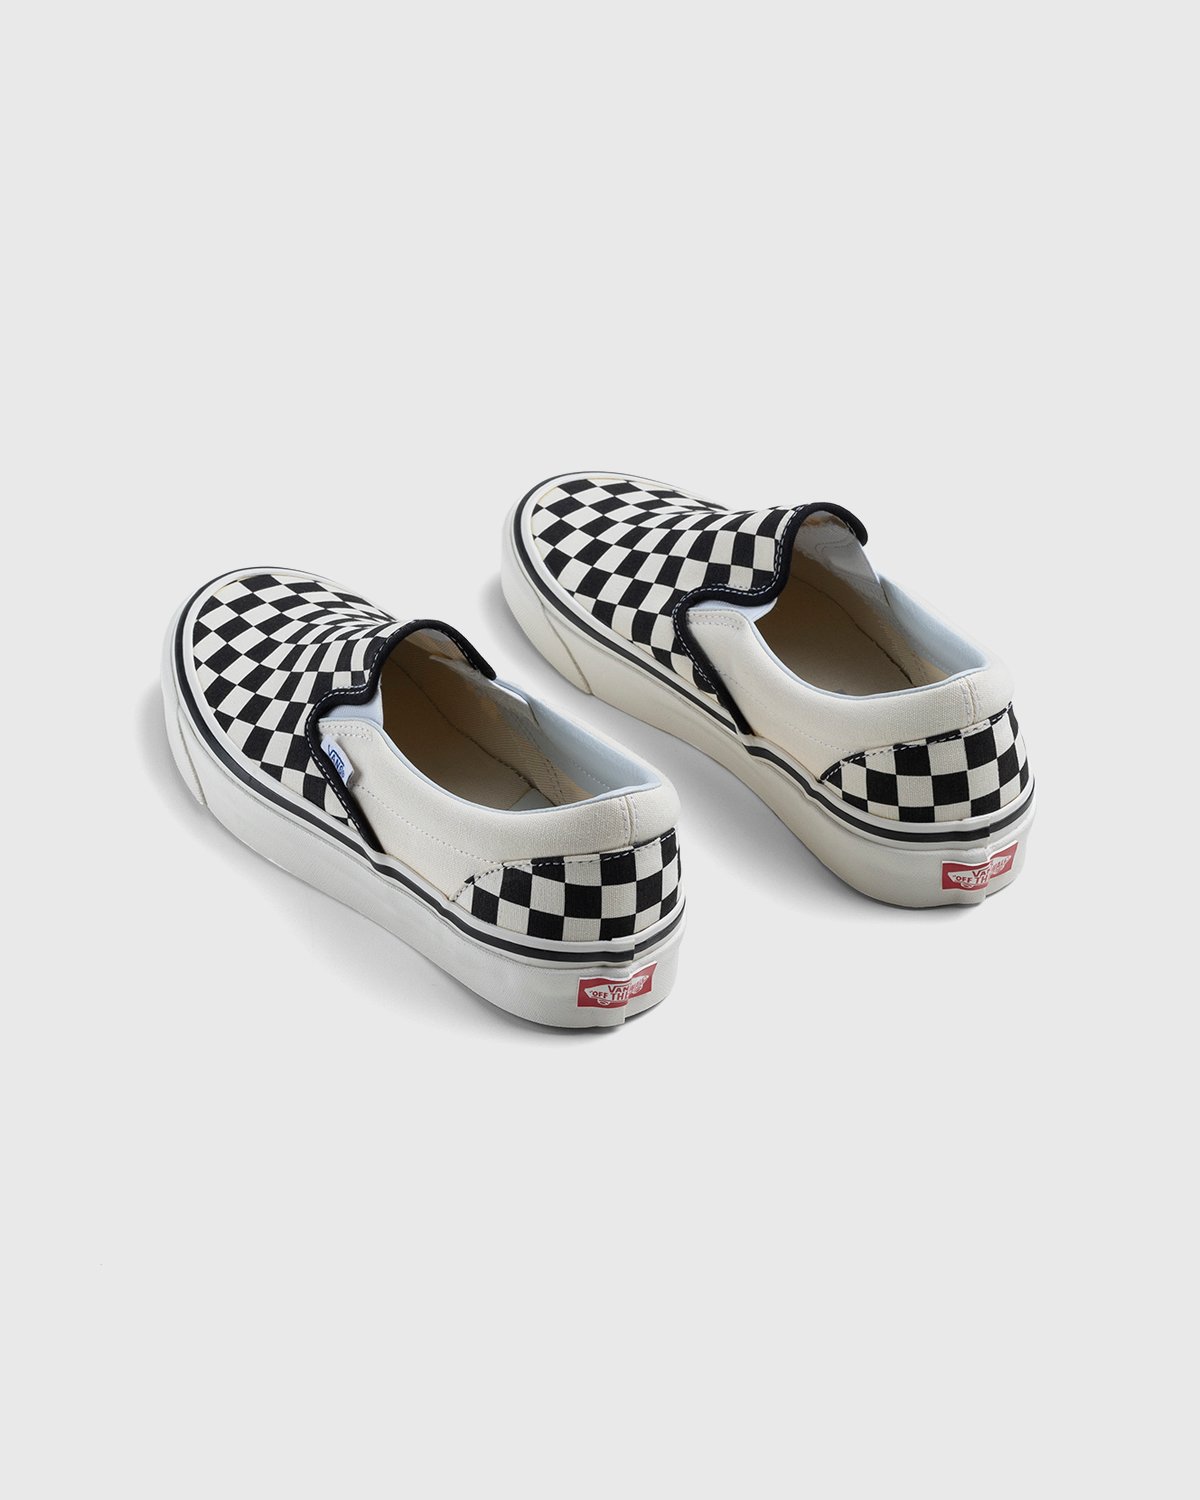 Vans - Anaheim Factory Classic Slip-On 98 DX Checkerboard - Footwear - White - Image 4